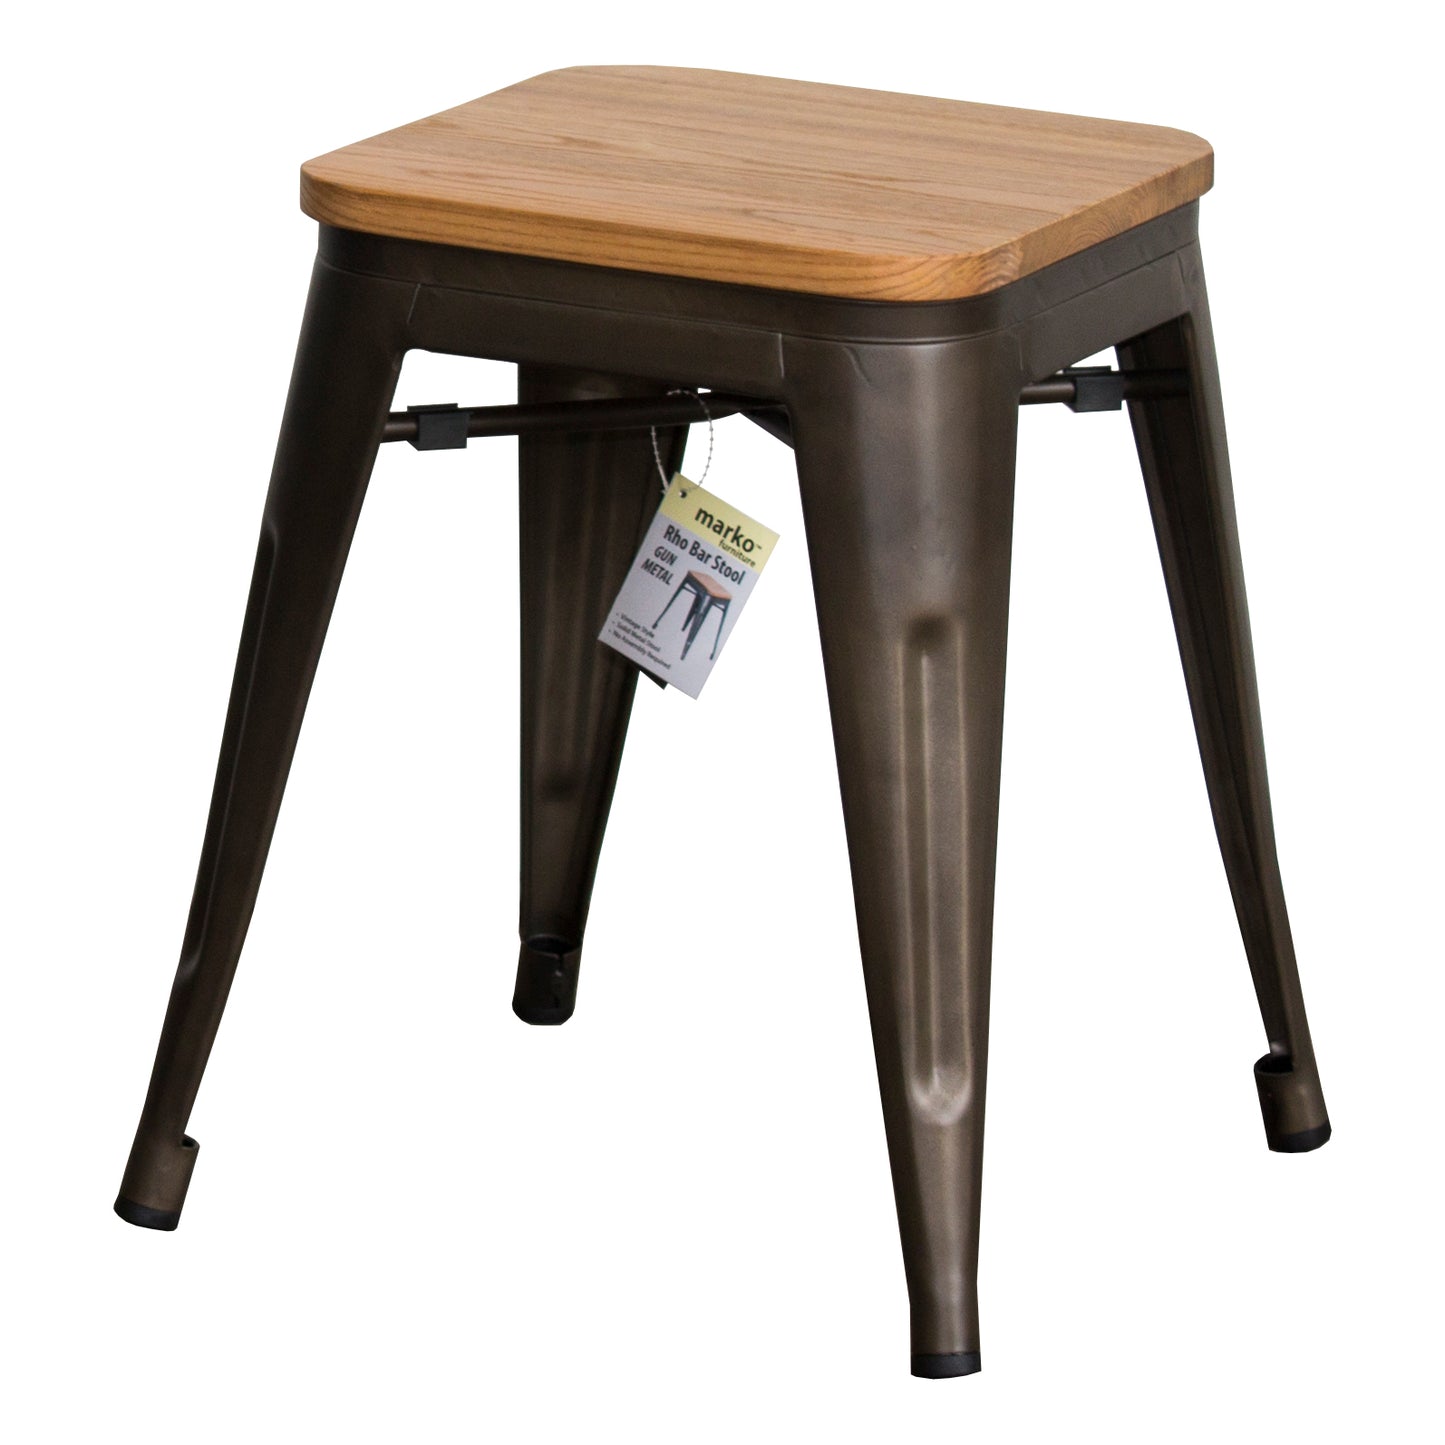 5PC Belvedere Table Florence Chair & Rho Stool Set - Gun Metal Grey